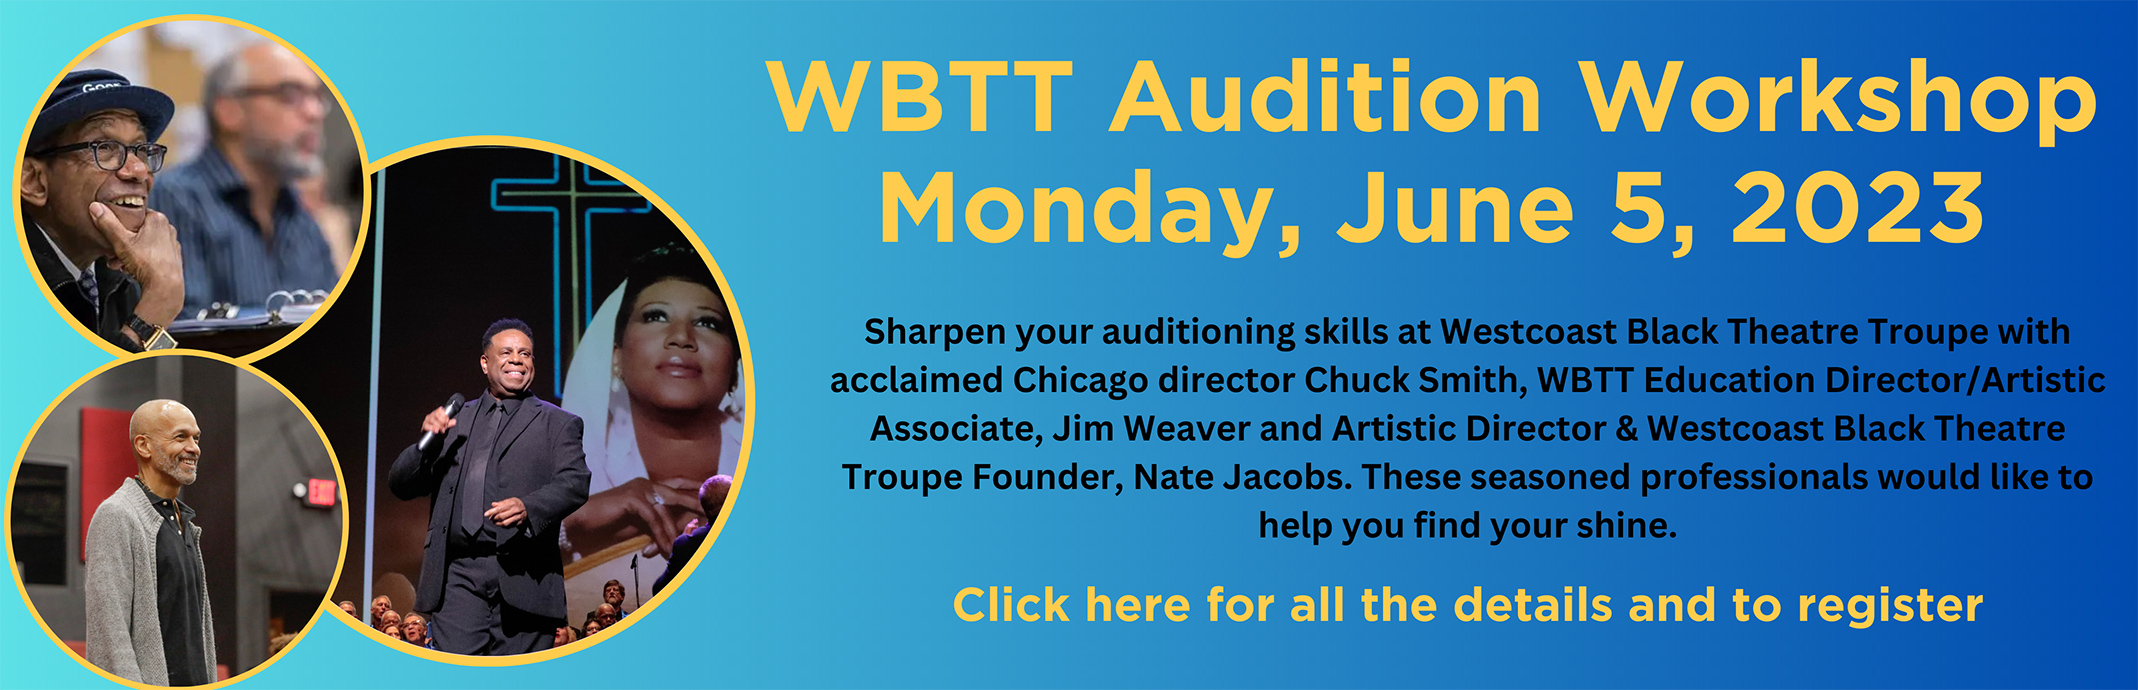 WBTT Audition Workshop: Monday, June 5, 2023